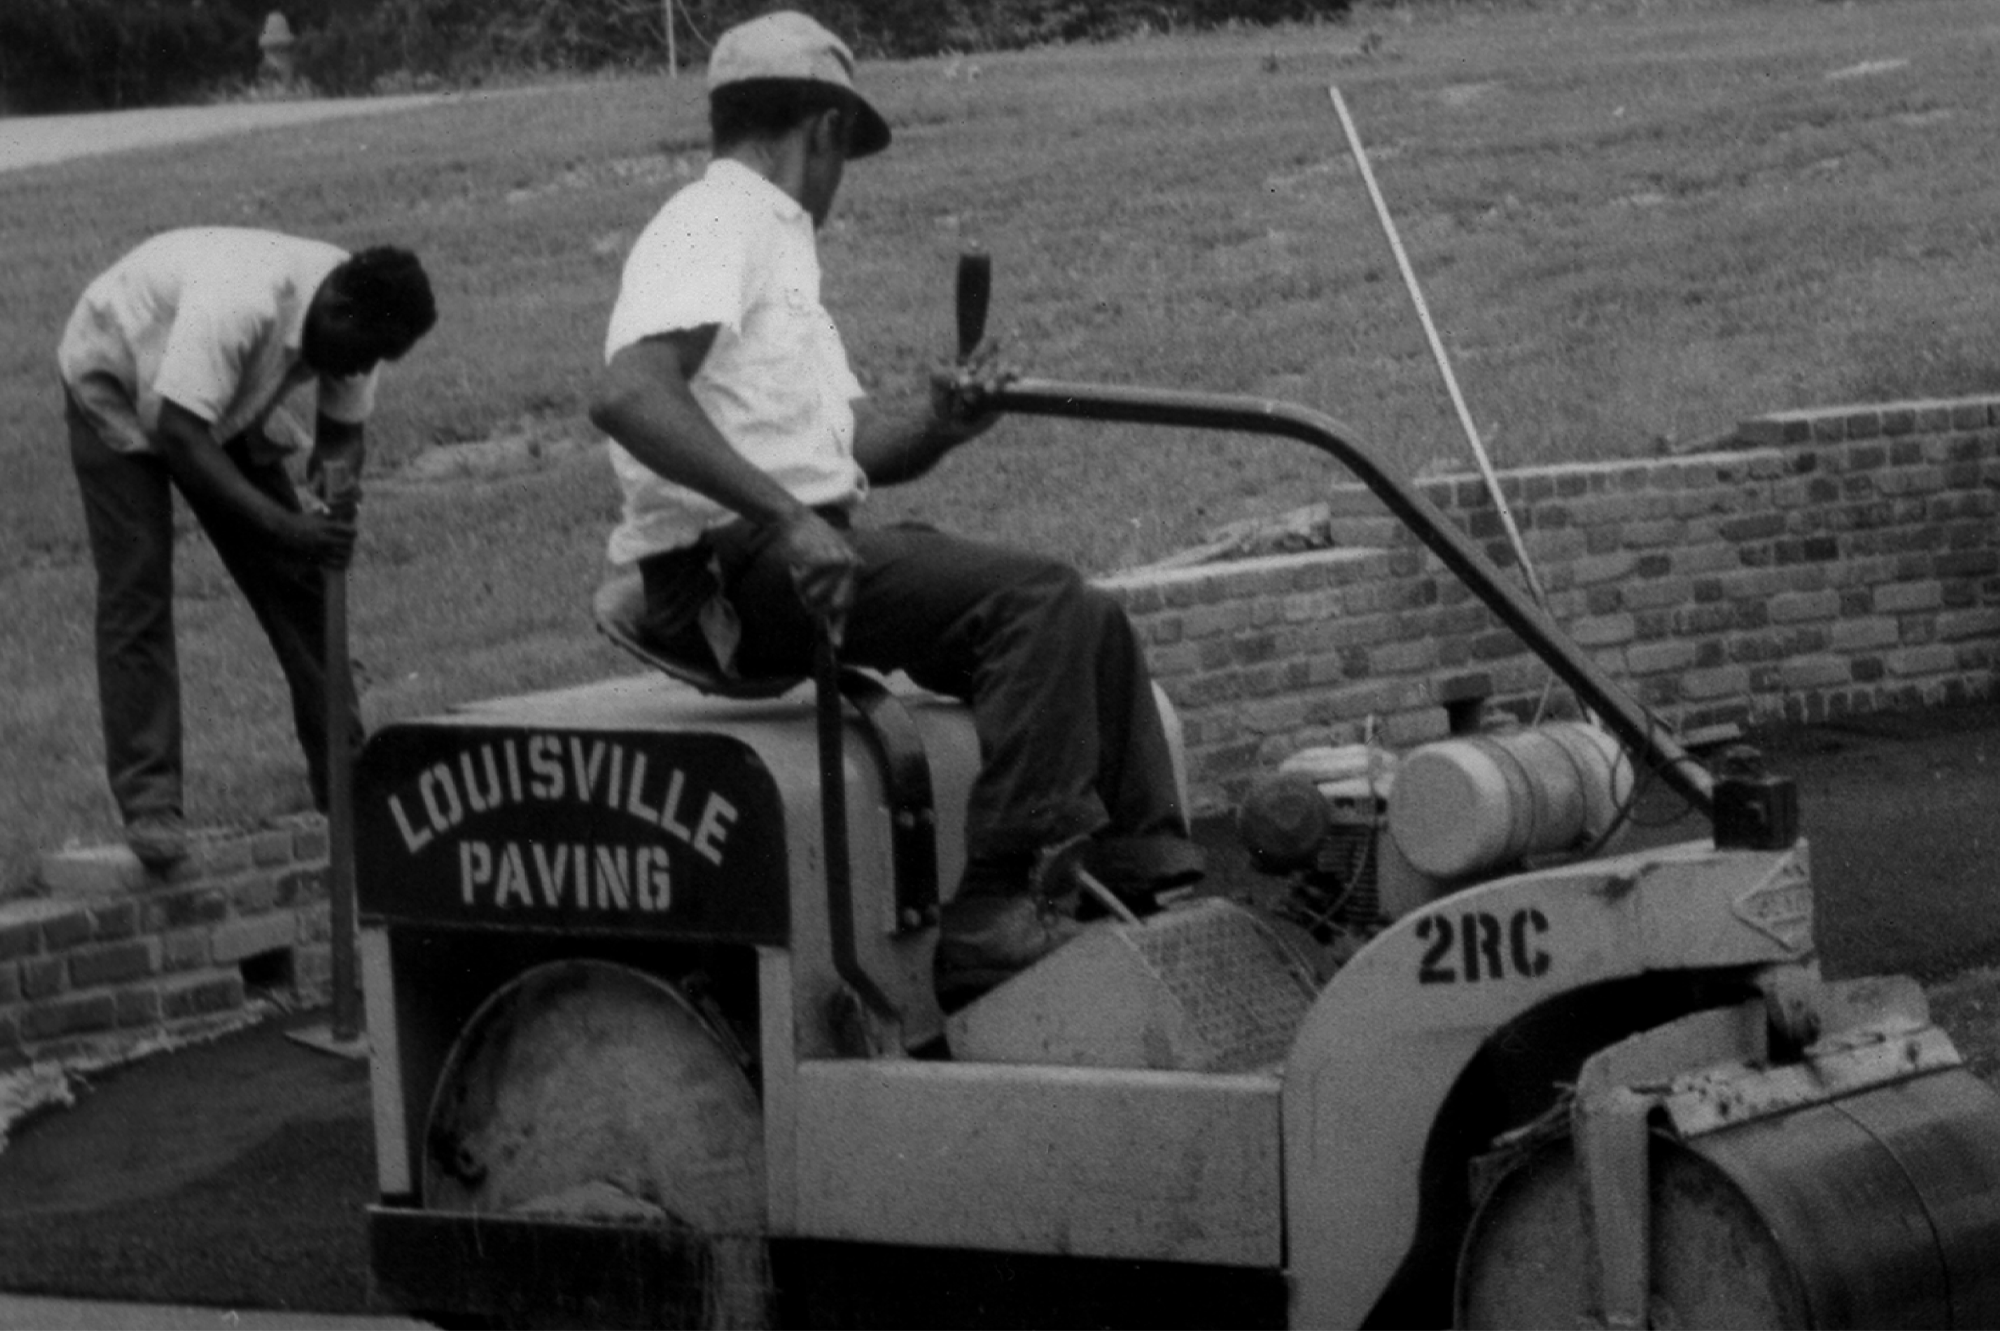 A photo of an early LPC worker on an asphalt roller in Kentuckiana.